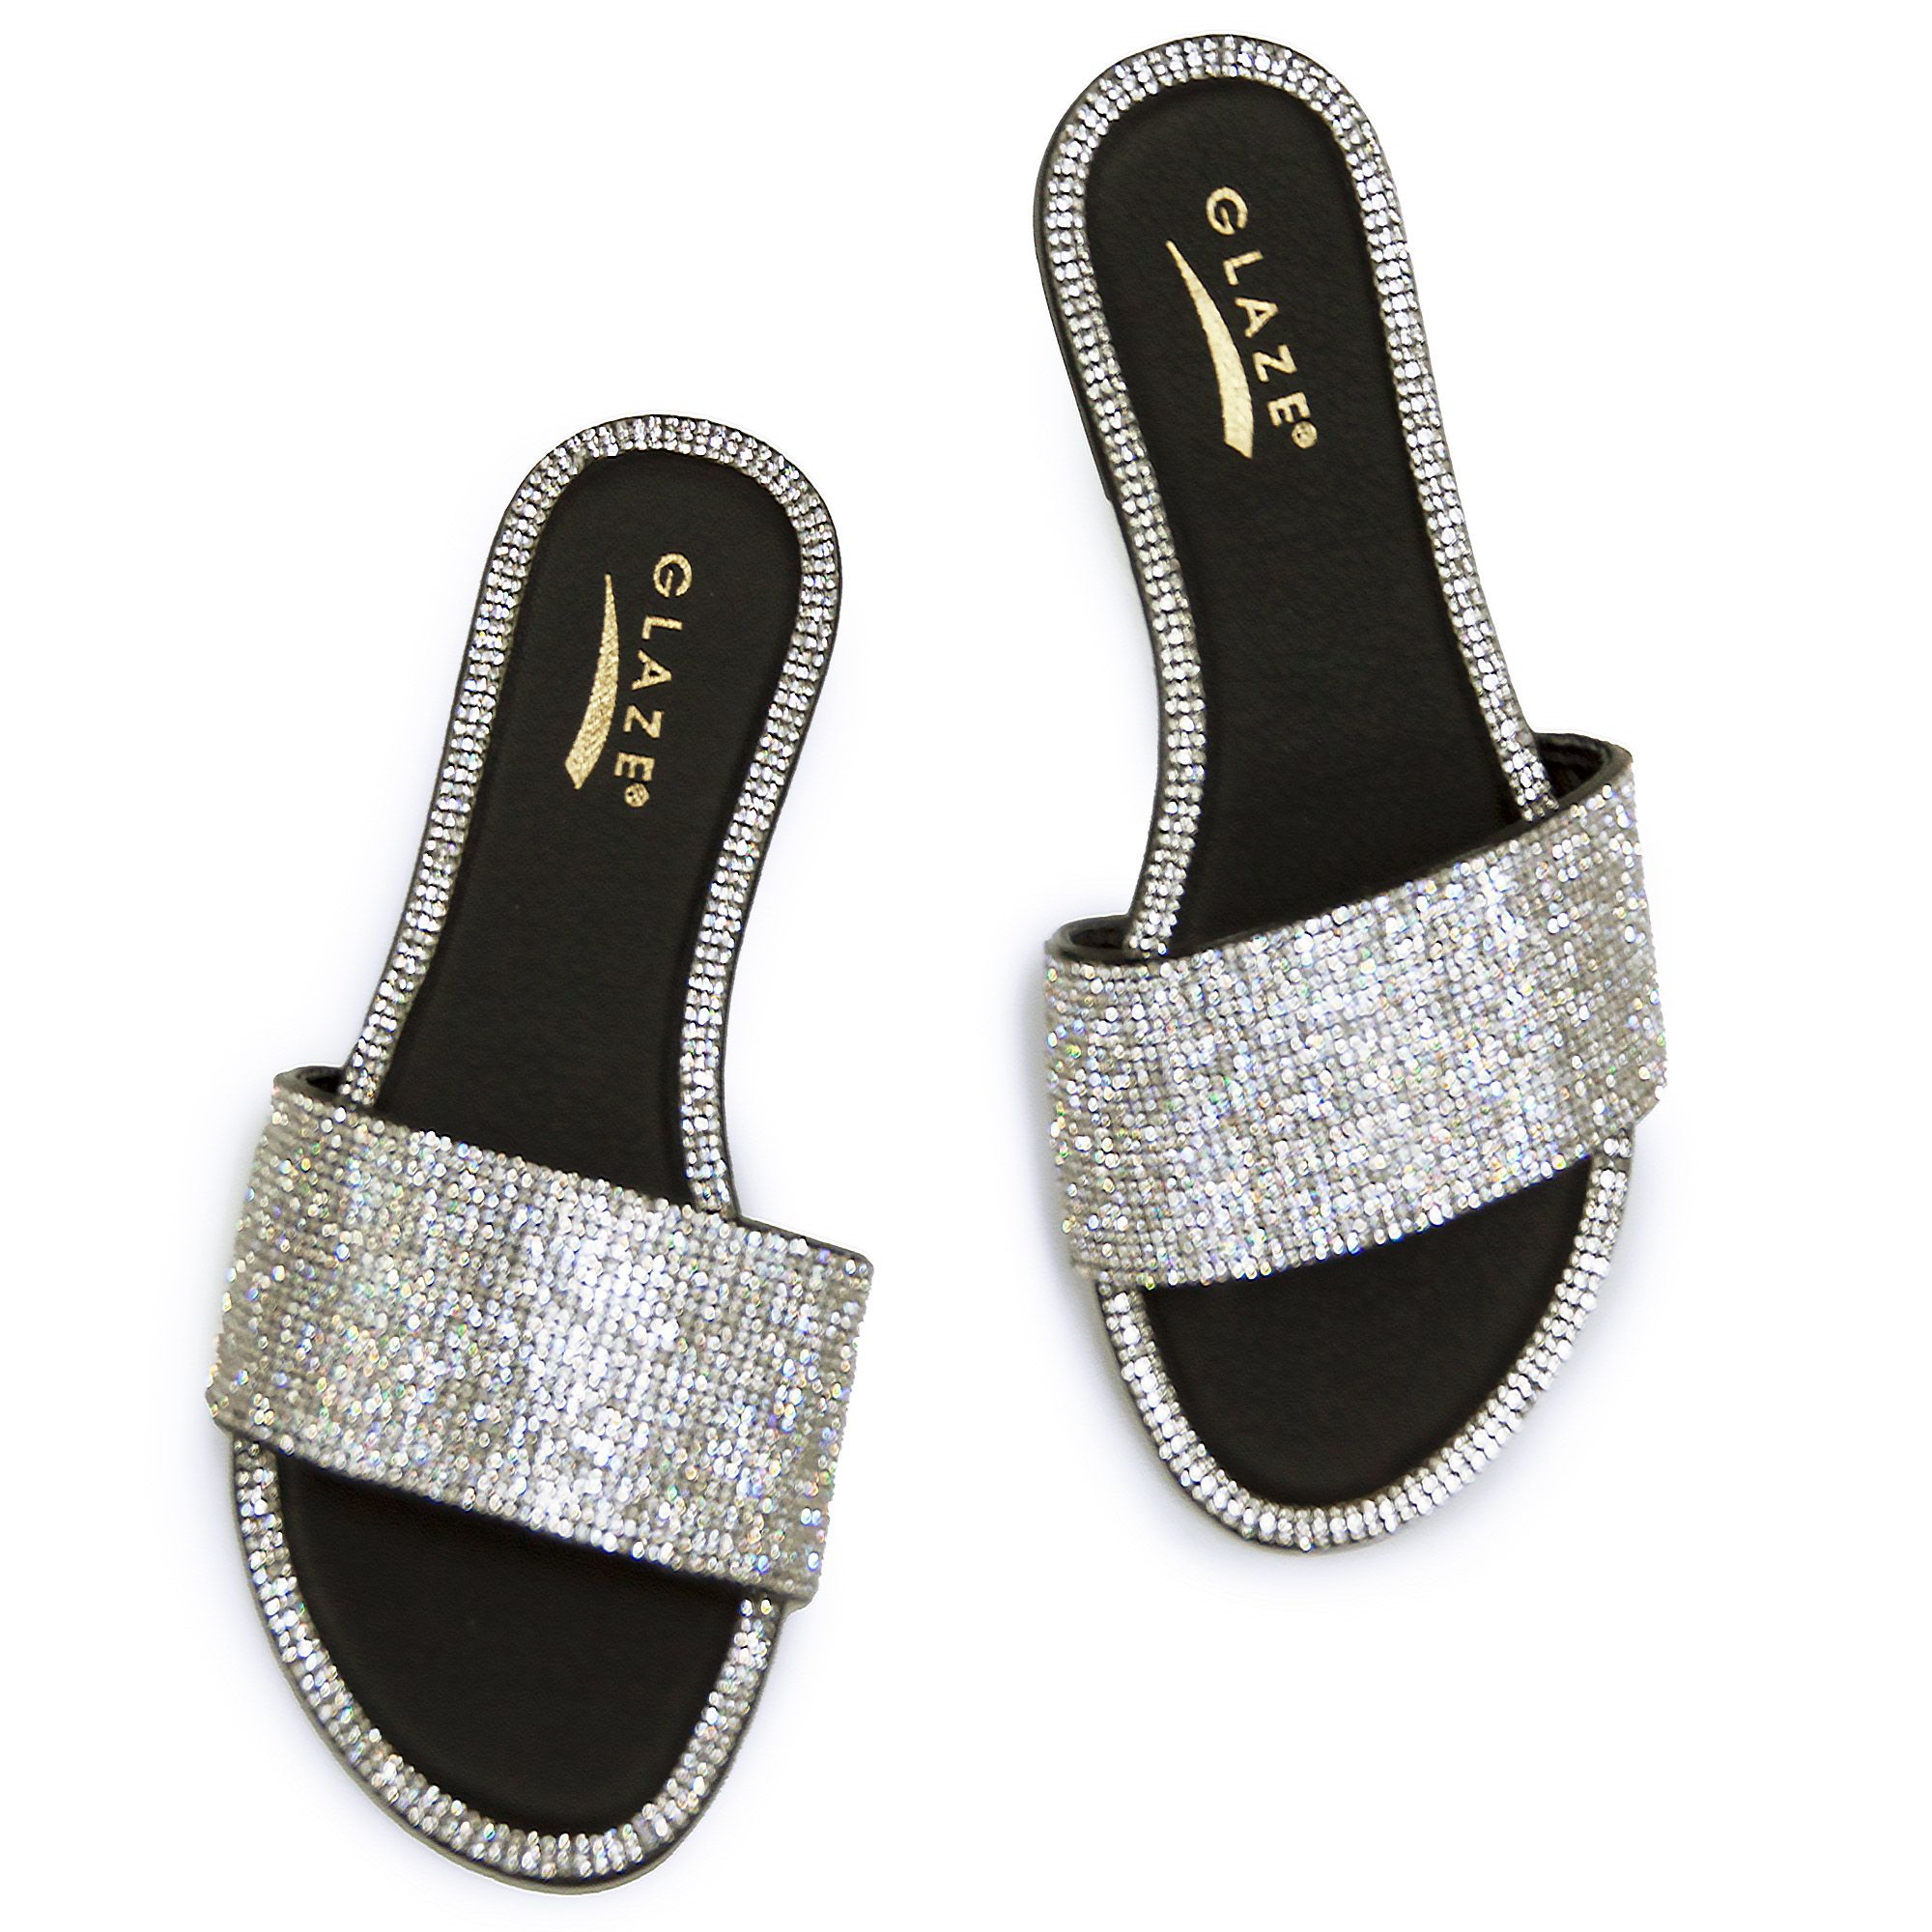  Womens Glitter Flat Sandals Rhinestone Open Toe Shoes